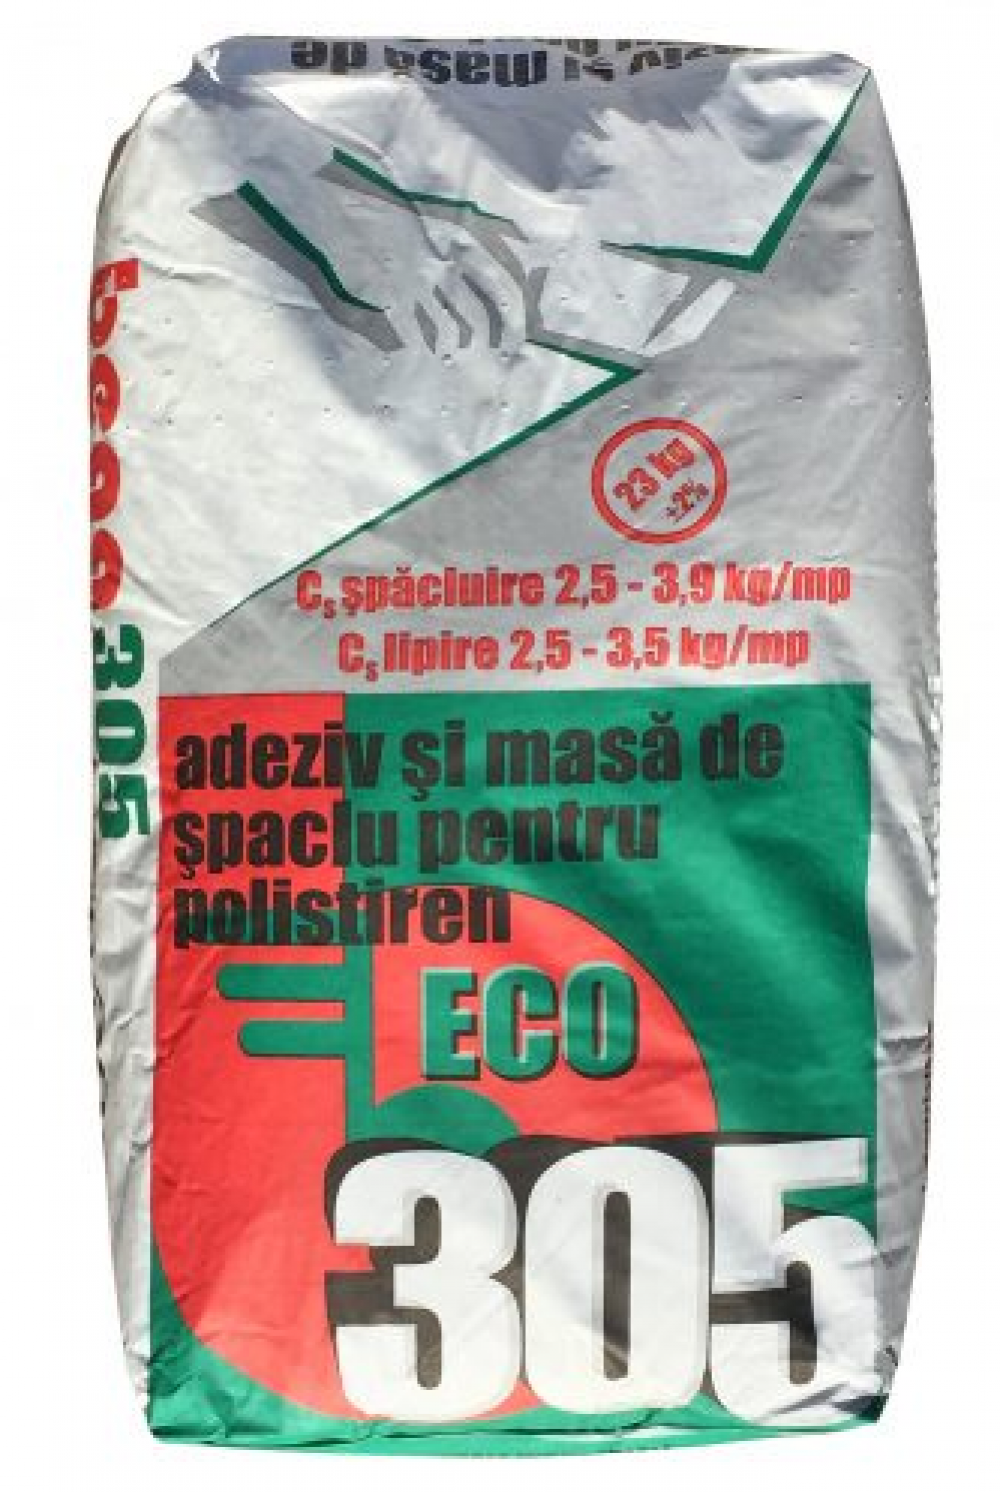 Adeziv si masa de spaclu pentru polistiren B305,  23 kg / sac, 60 saci / palet